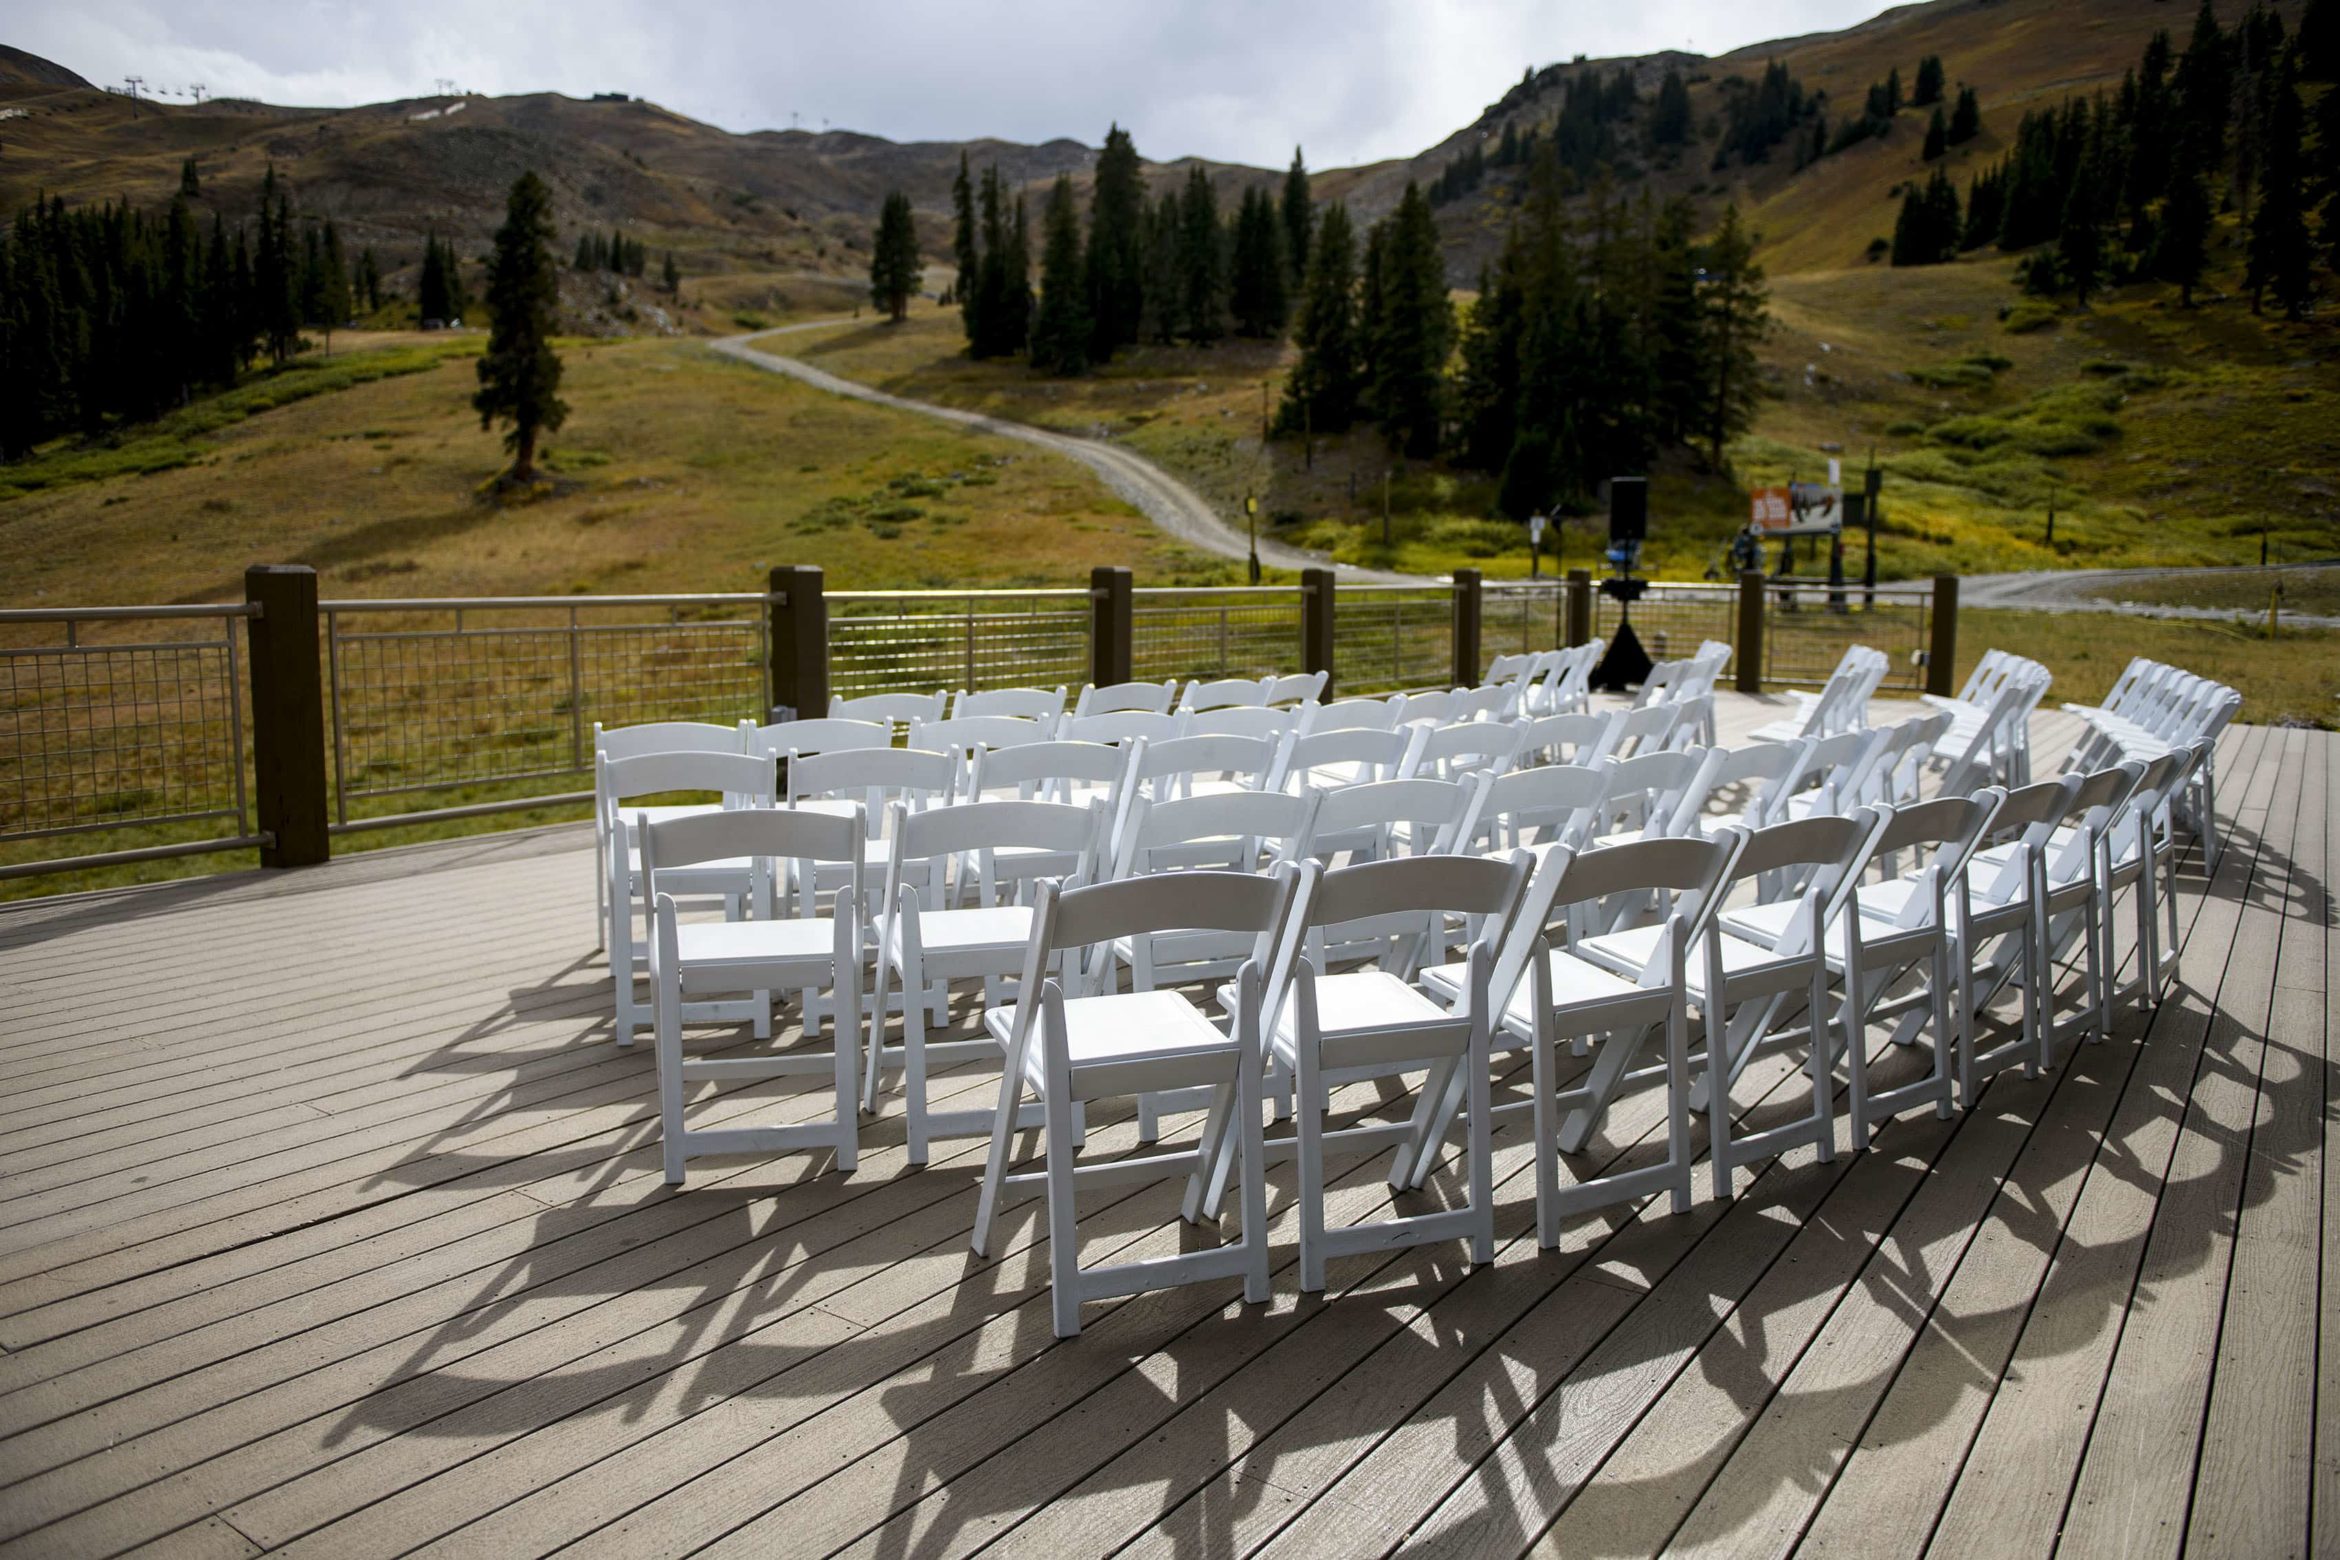 Wedding deck ceremony setup at Arapahoe Basin's Black Mountain Lodge